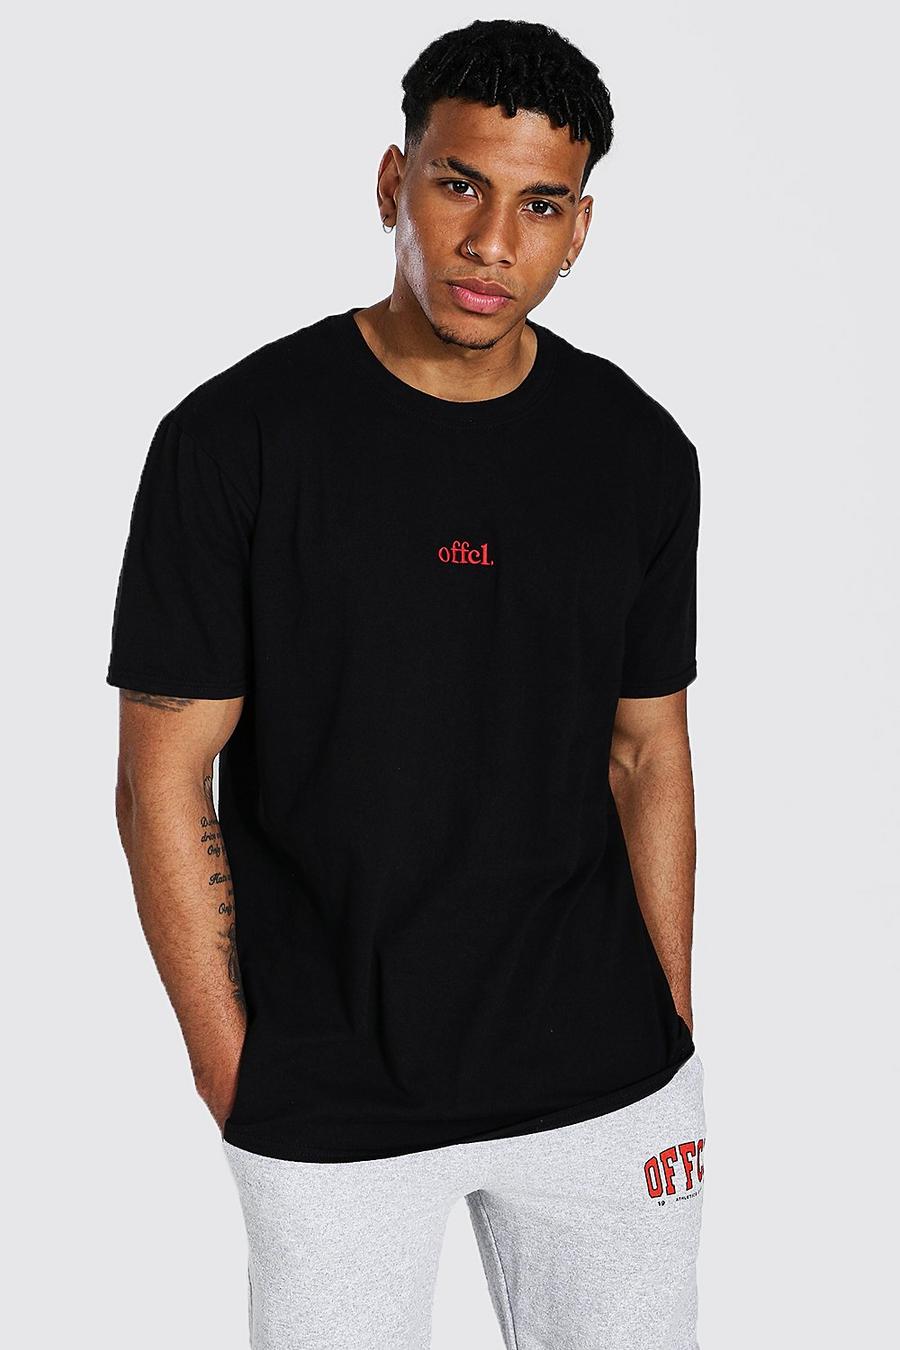 Black Oversized Offcl T-Shirt image number 1